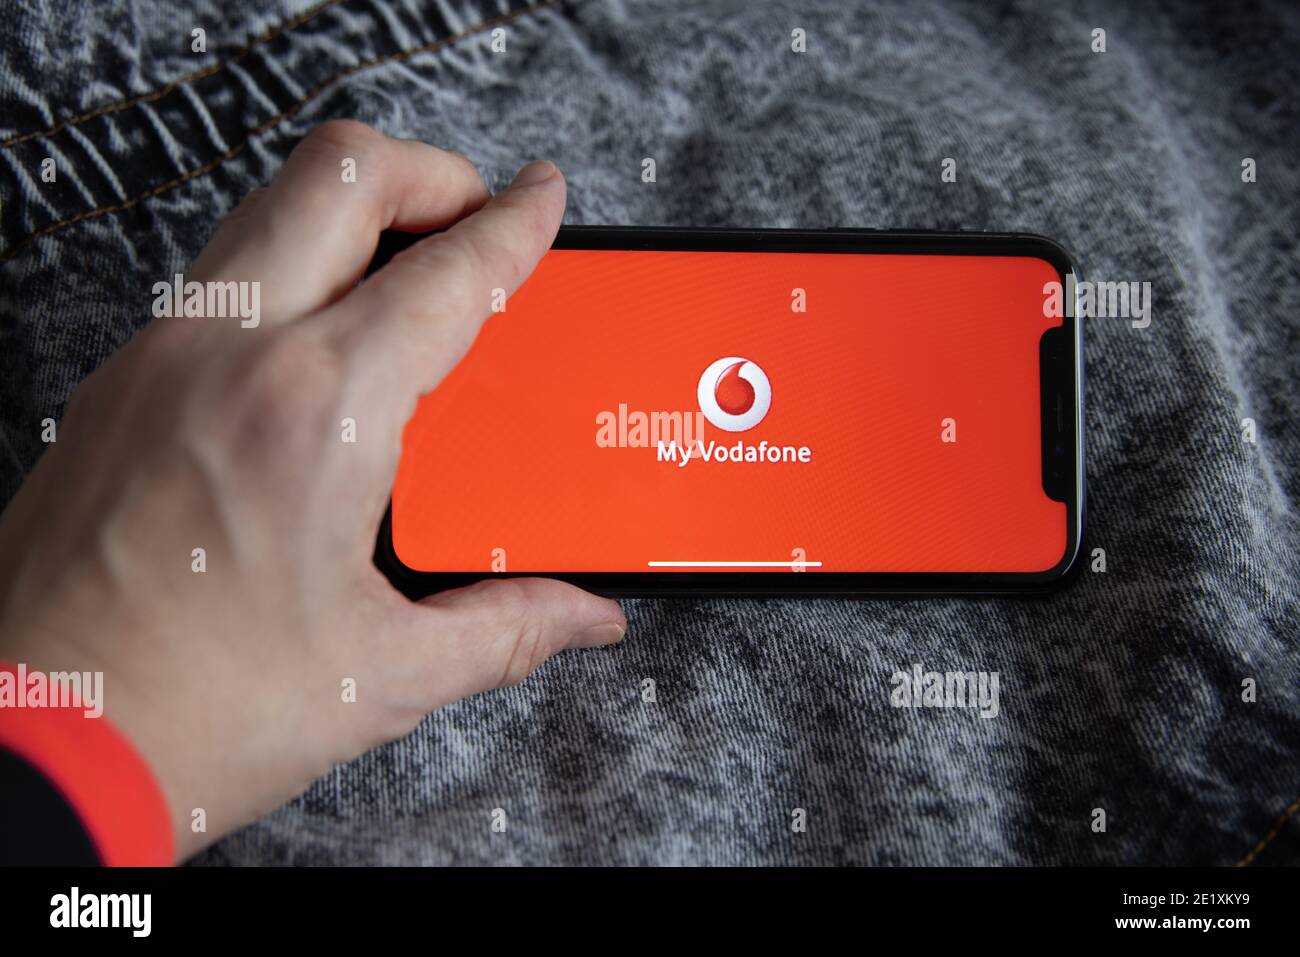 Vodafone a largest telecommunication company. Hand holding iPhone 11 with Vodafone logo. Stock Photo